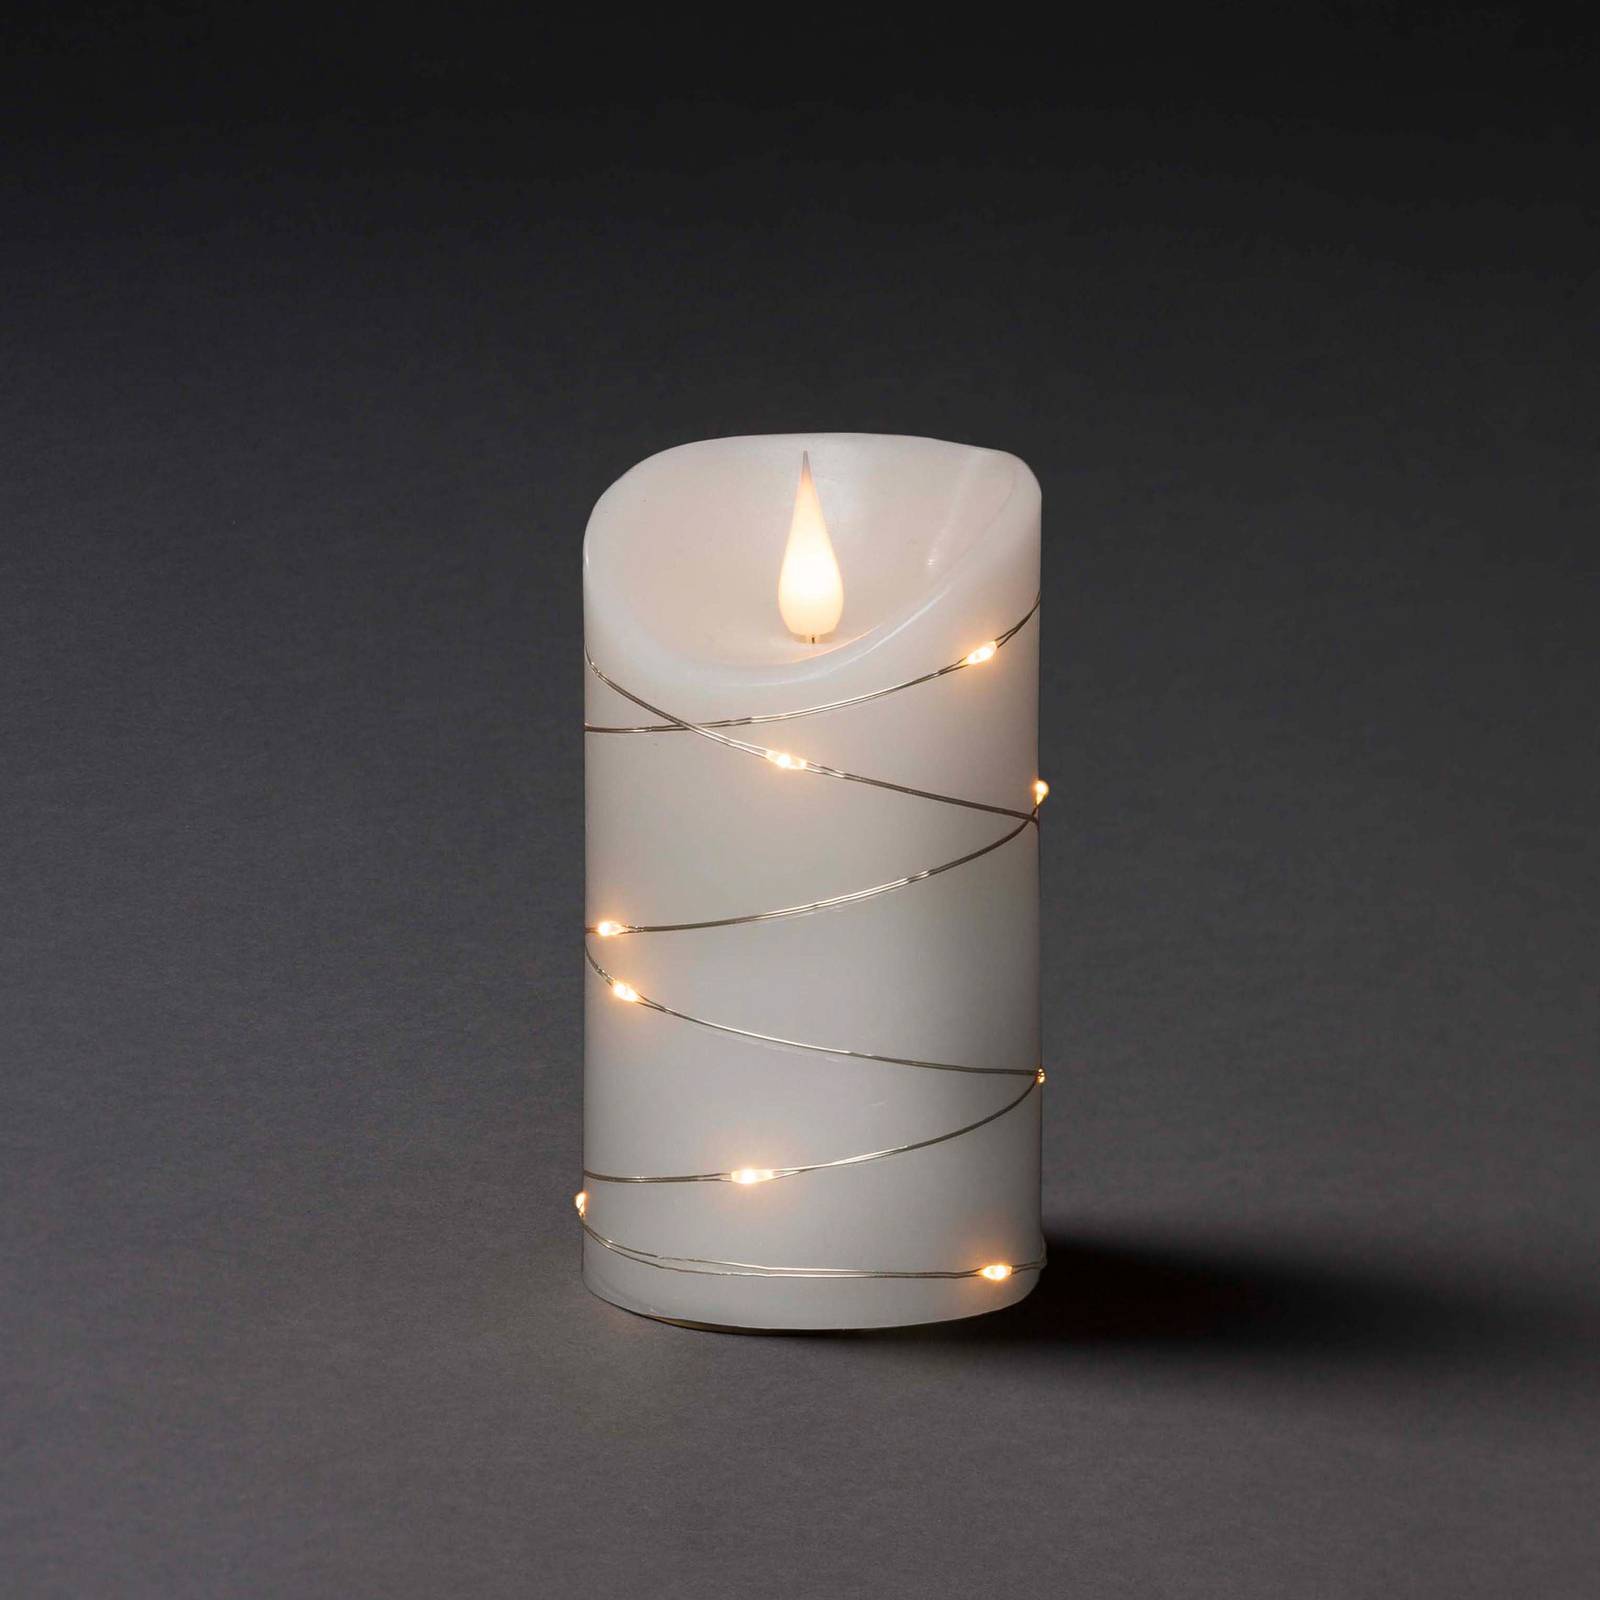 Konstsmide Christmas LED vosková svíčka bílá Barva světla teplá bílá 13,5 cm